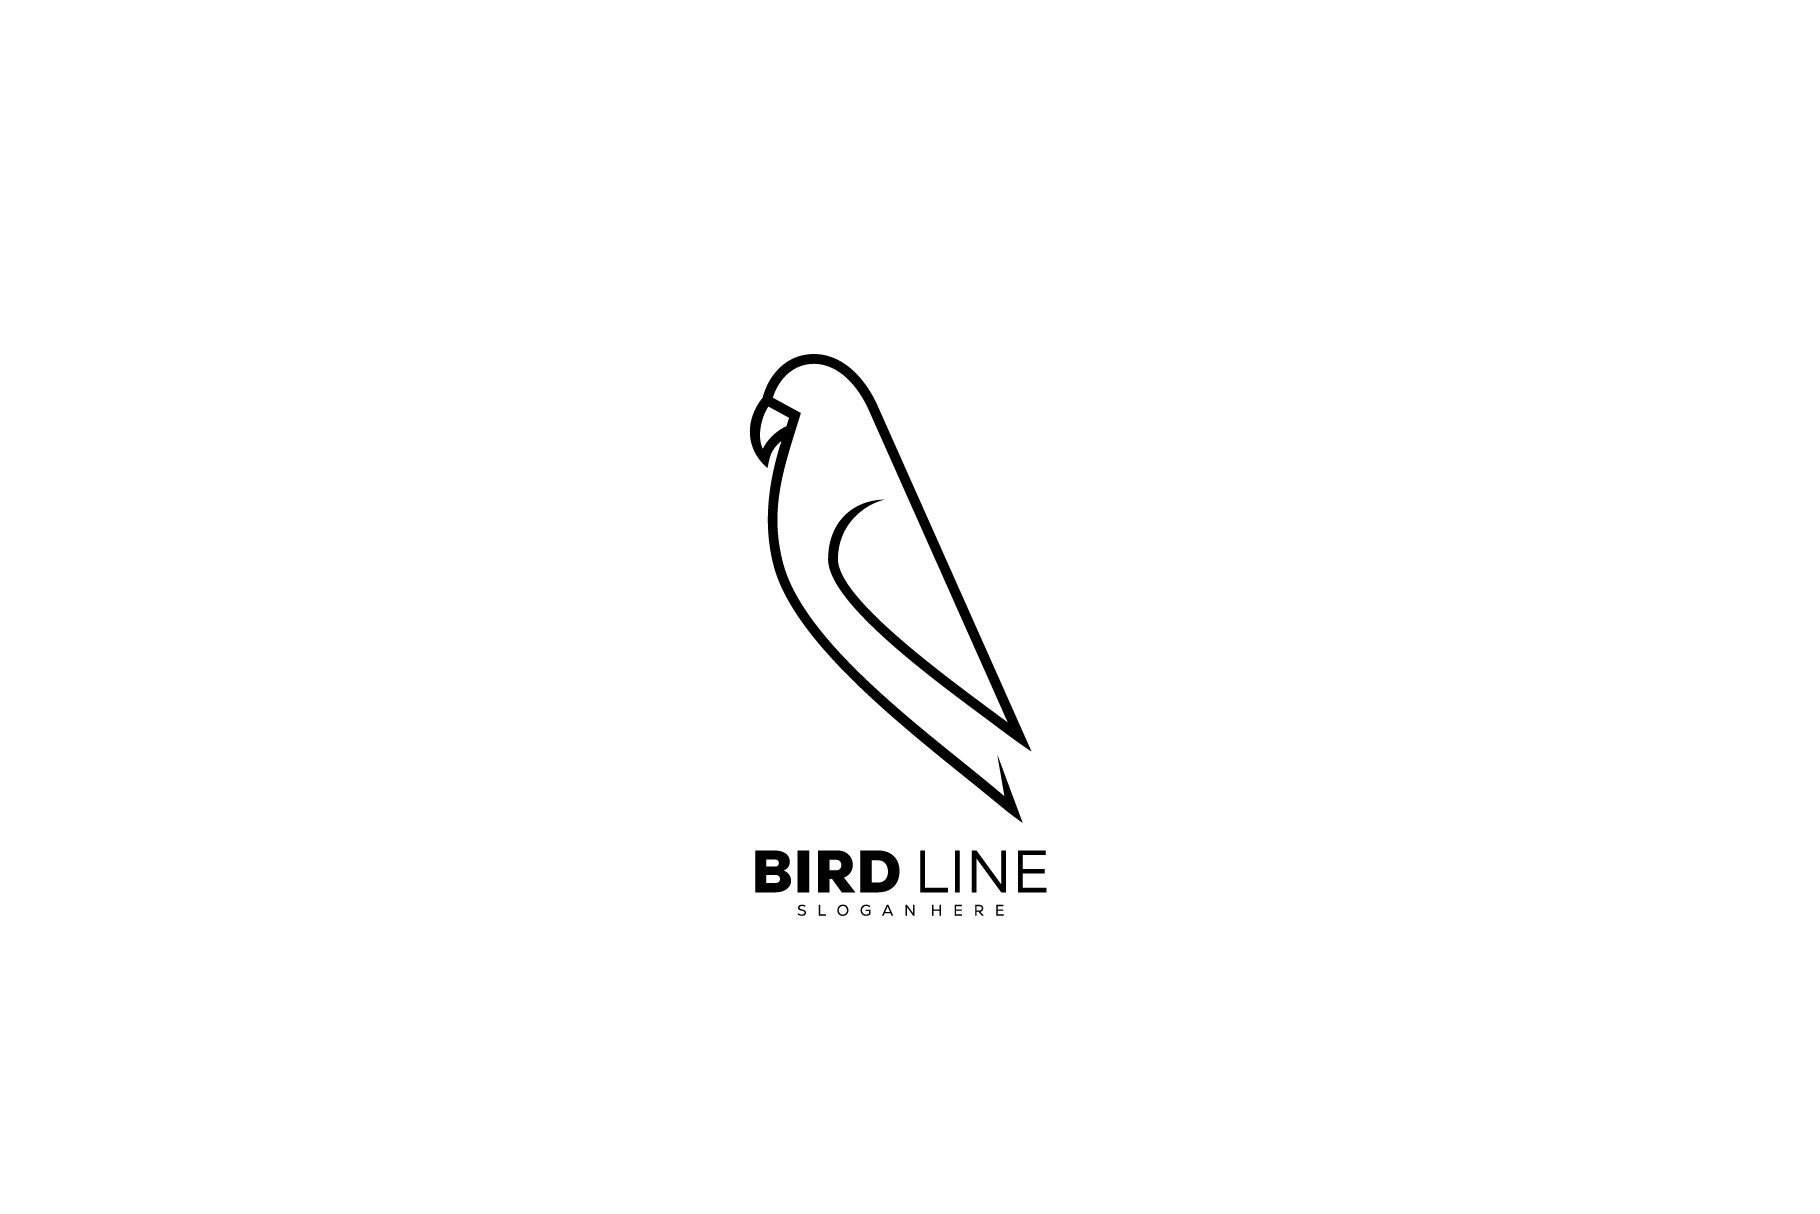 Parrot design line art logo illustra cover image.